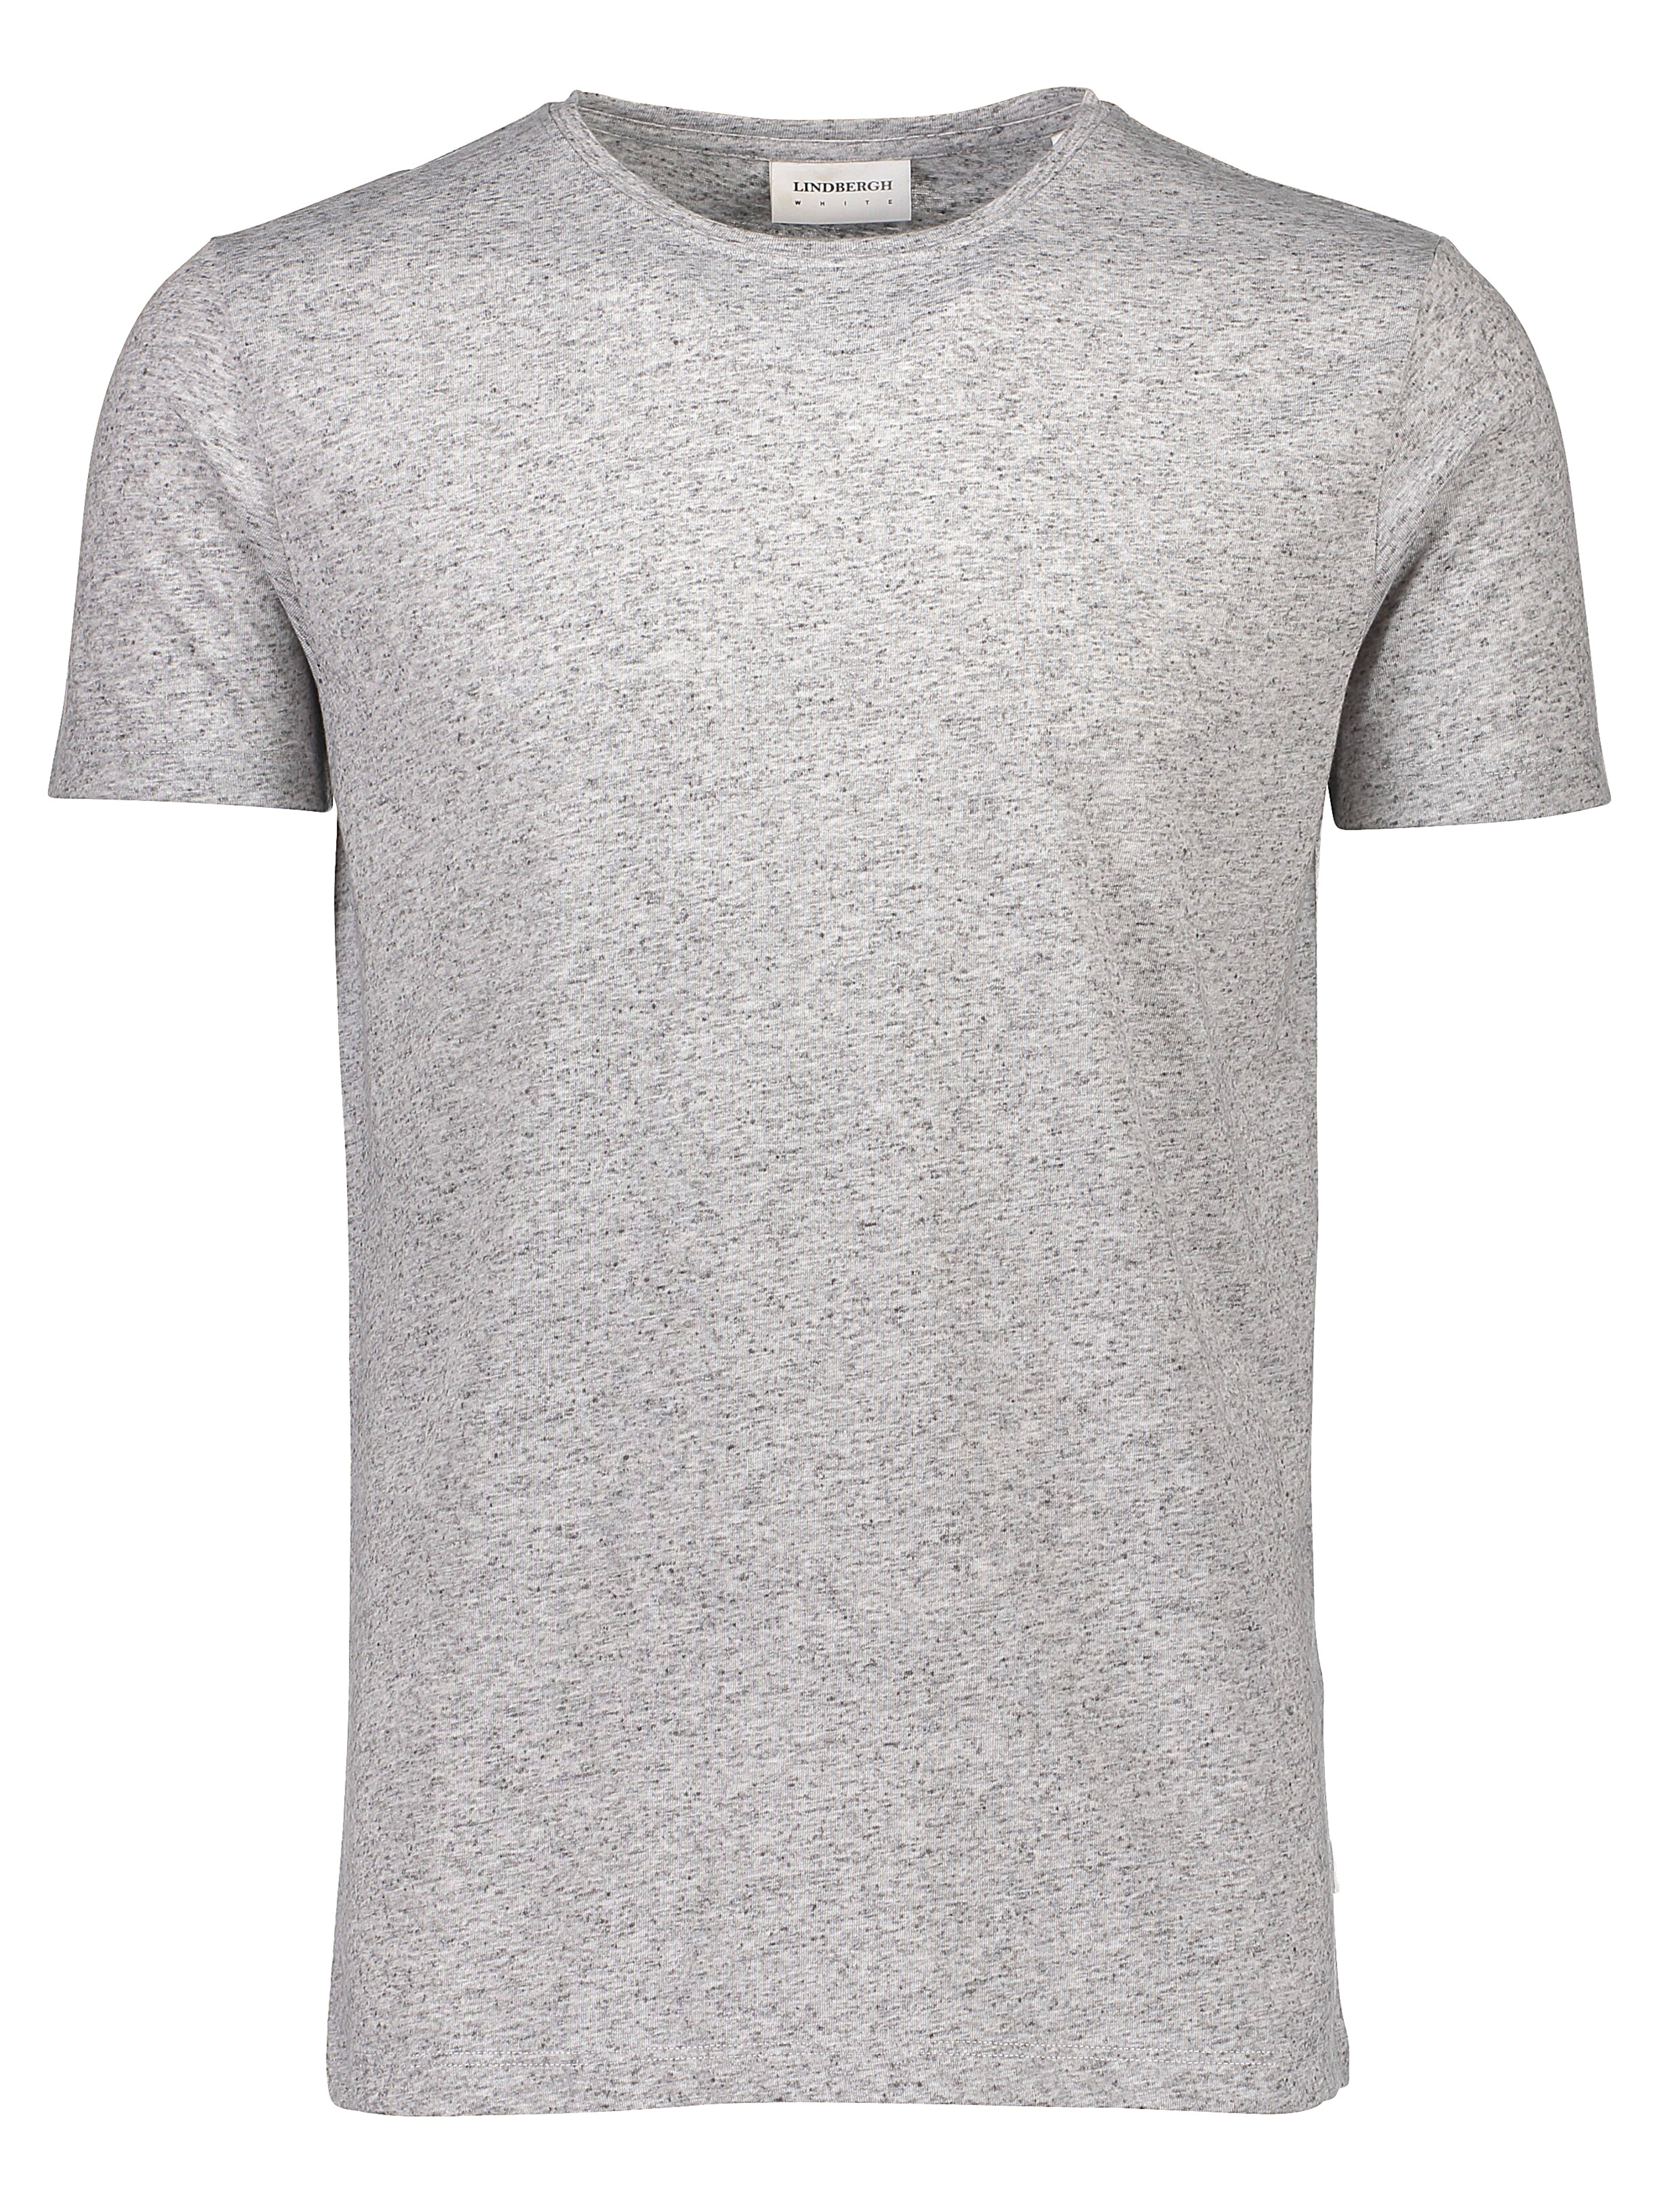 Lindbergh T-Shirt grau / grey